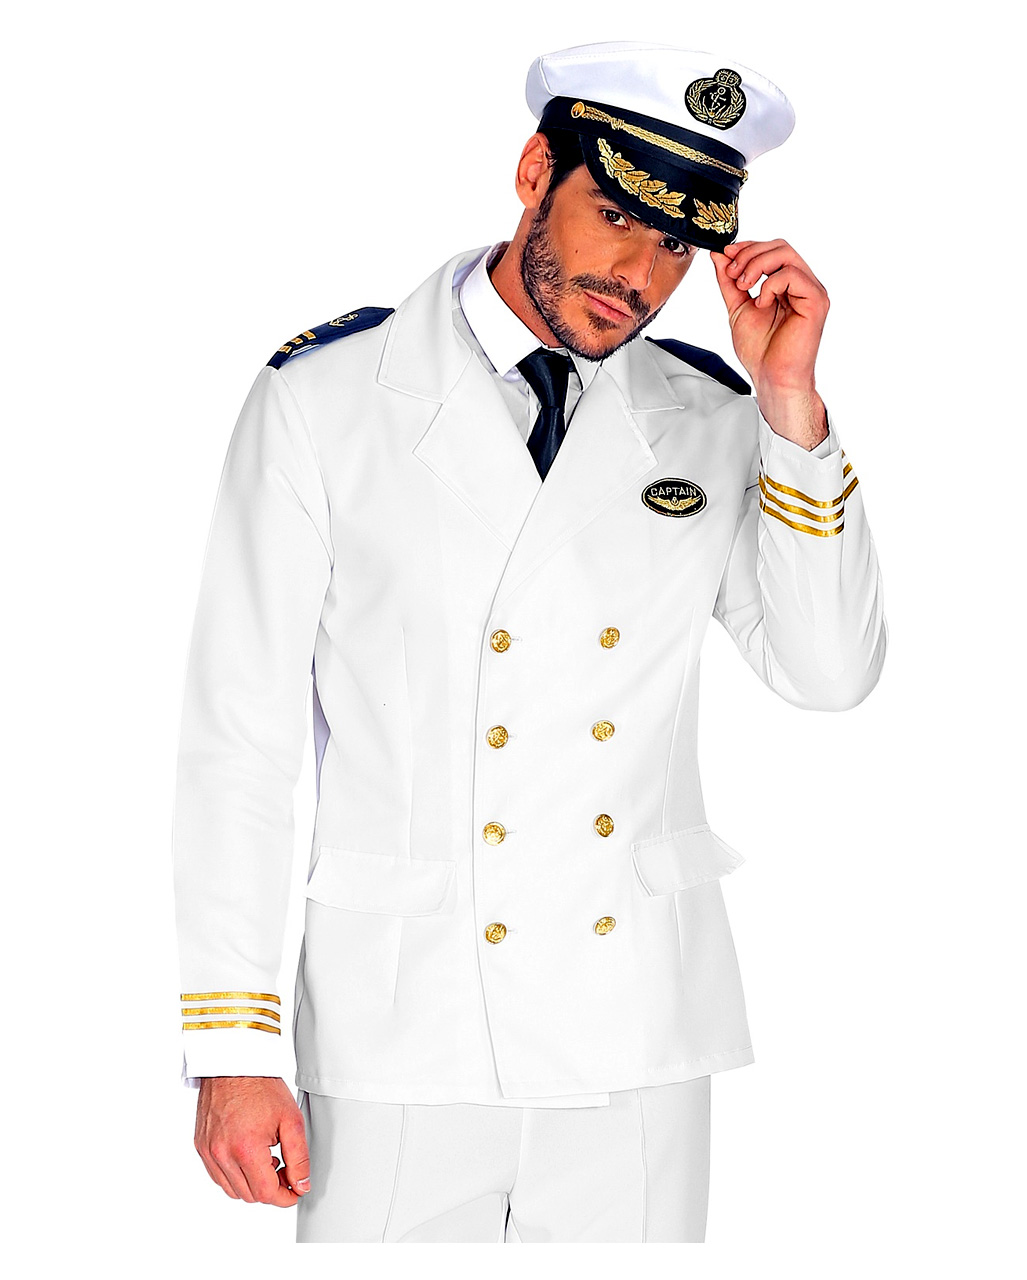 Captain Jacket Order For Carnival And Carnival Horror